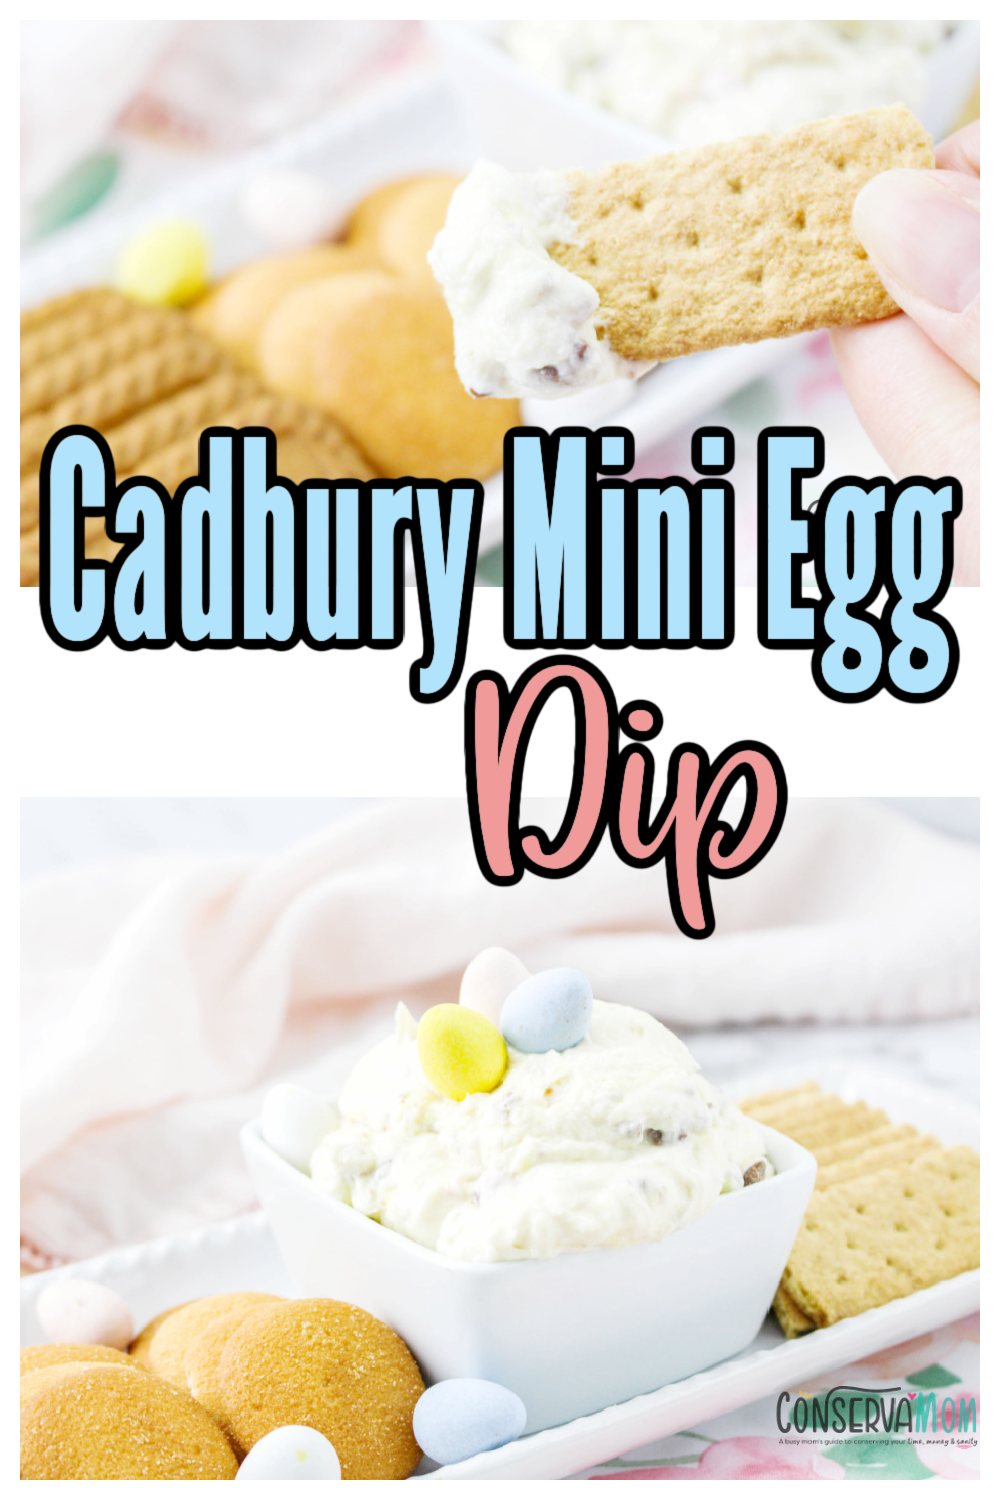 Cadbury Mini Egg Dip